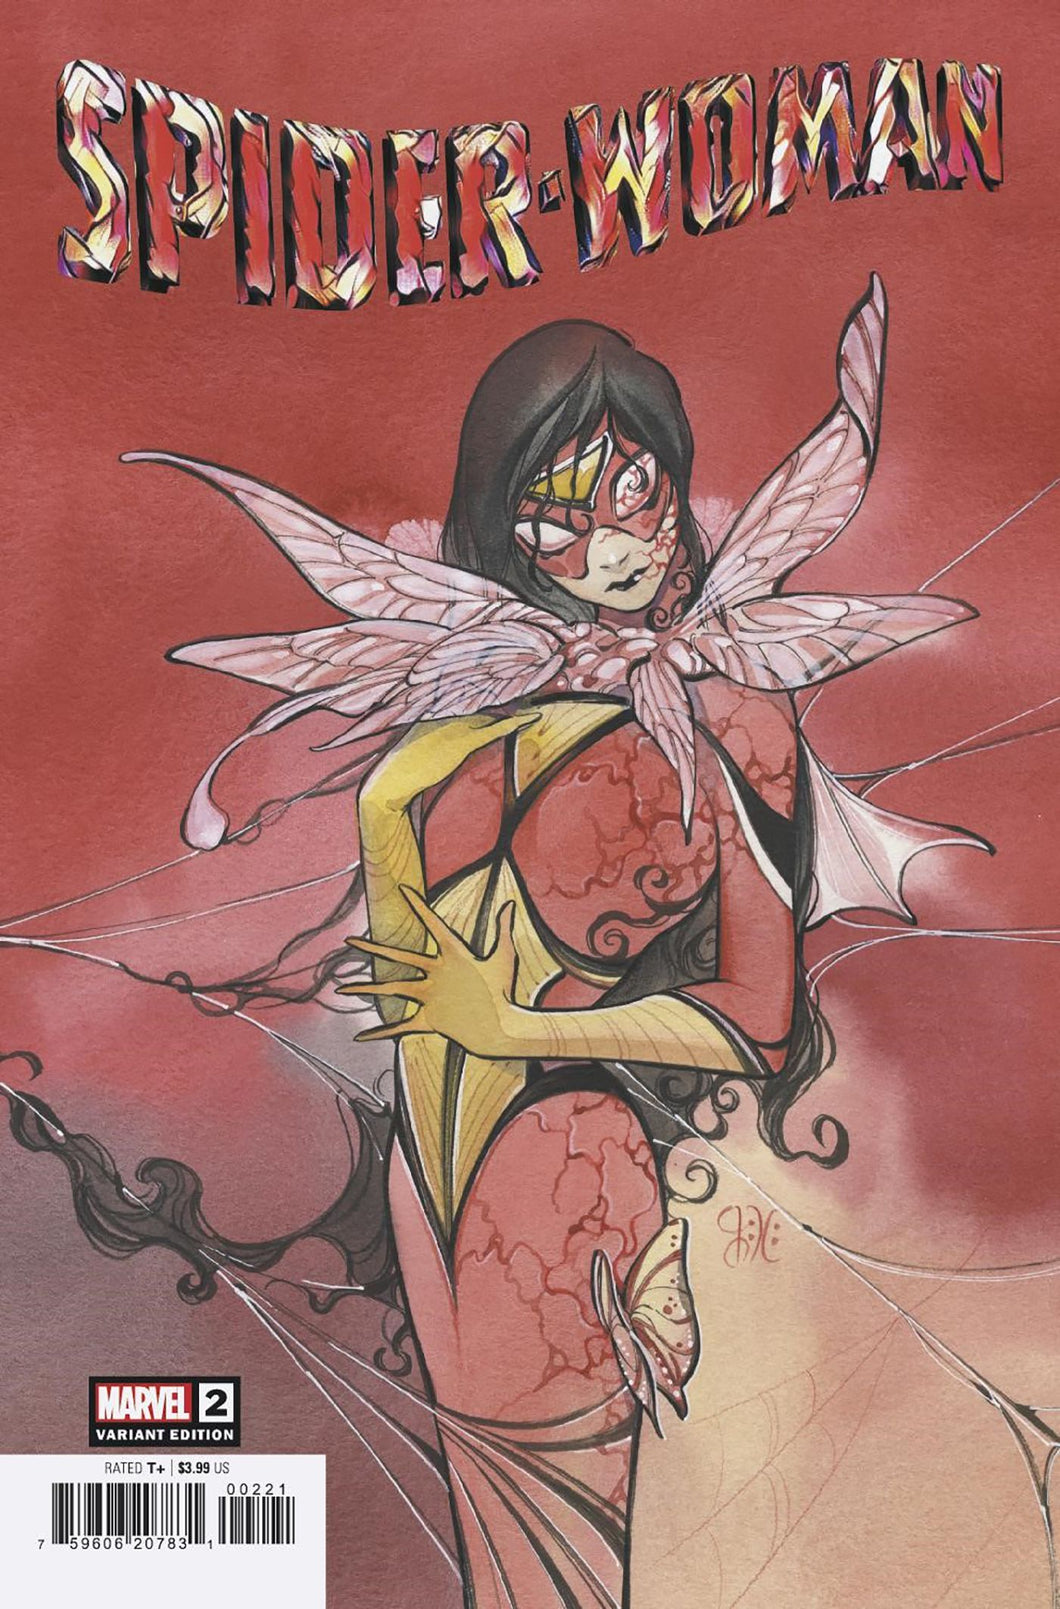 SPIDER-WOMAN #2 (PEACH MOMOKO NIGHTMARE VARIANT)